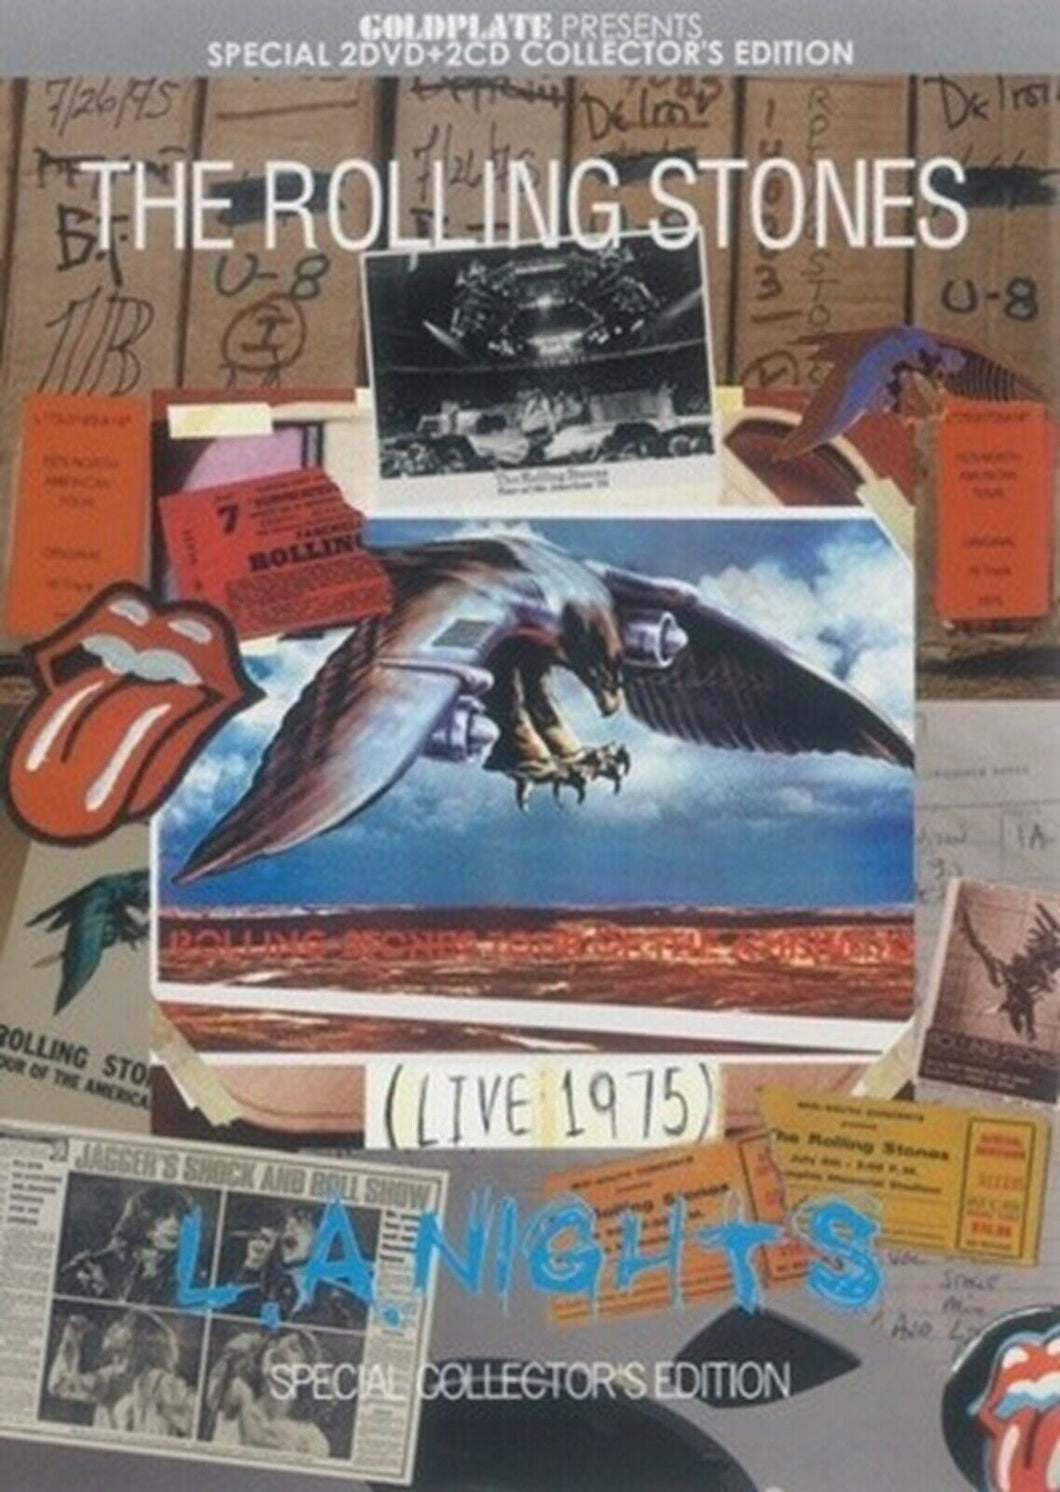 The Rolling Stones LA Nights 1975 Los Angeles USA July 11&13 2CD 2DVD Music Rock